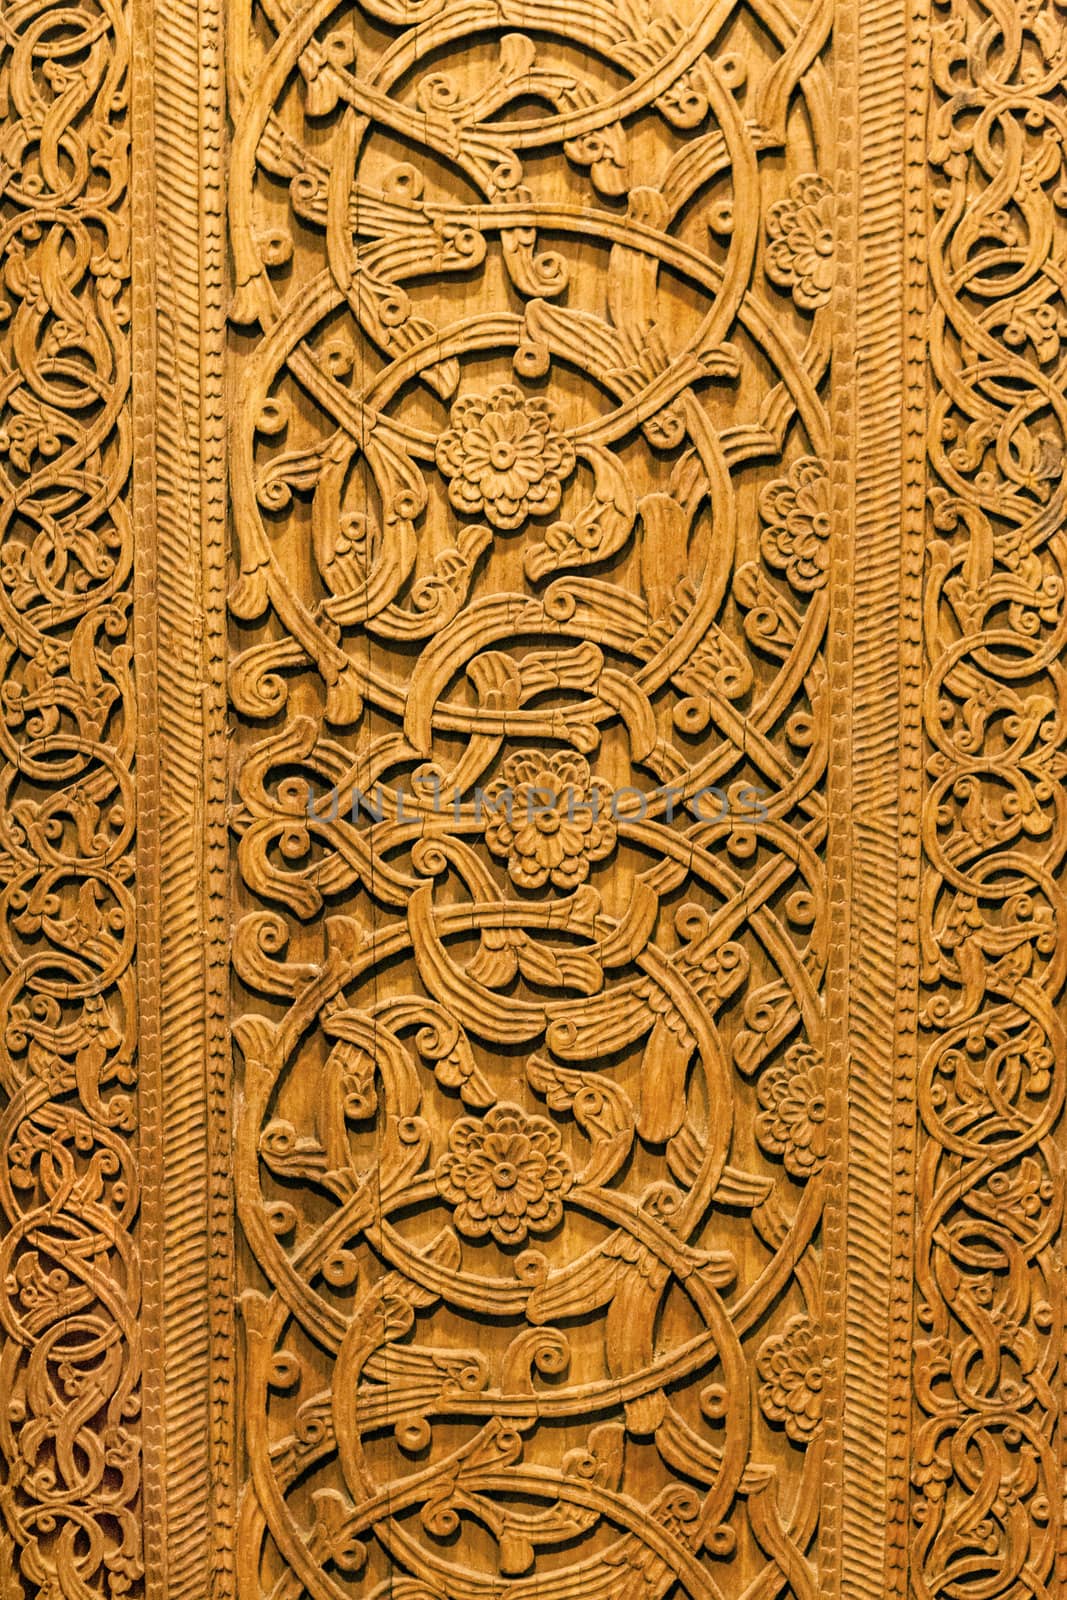 Wood ornament pattern. Handmade wood carvings